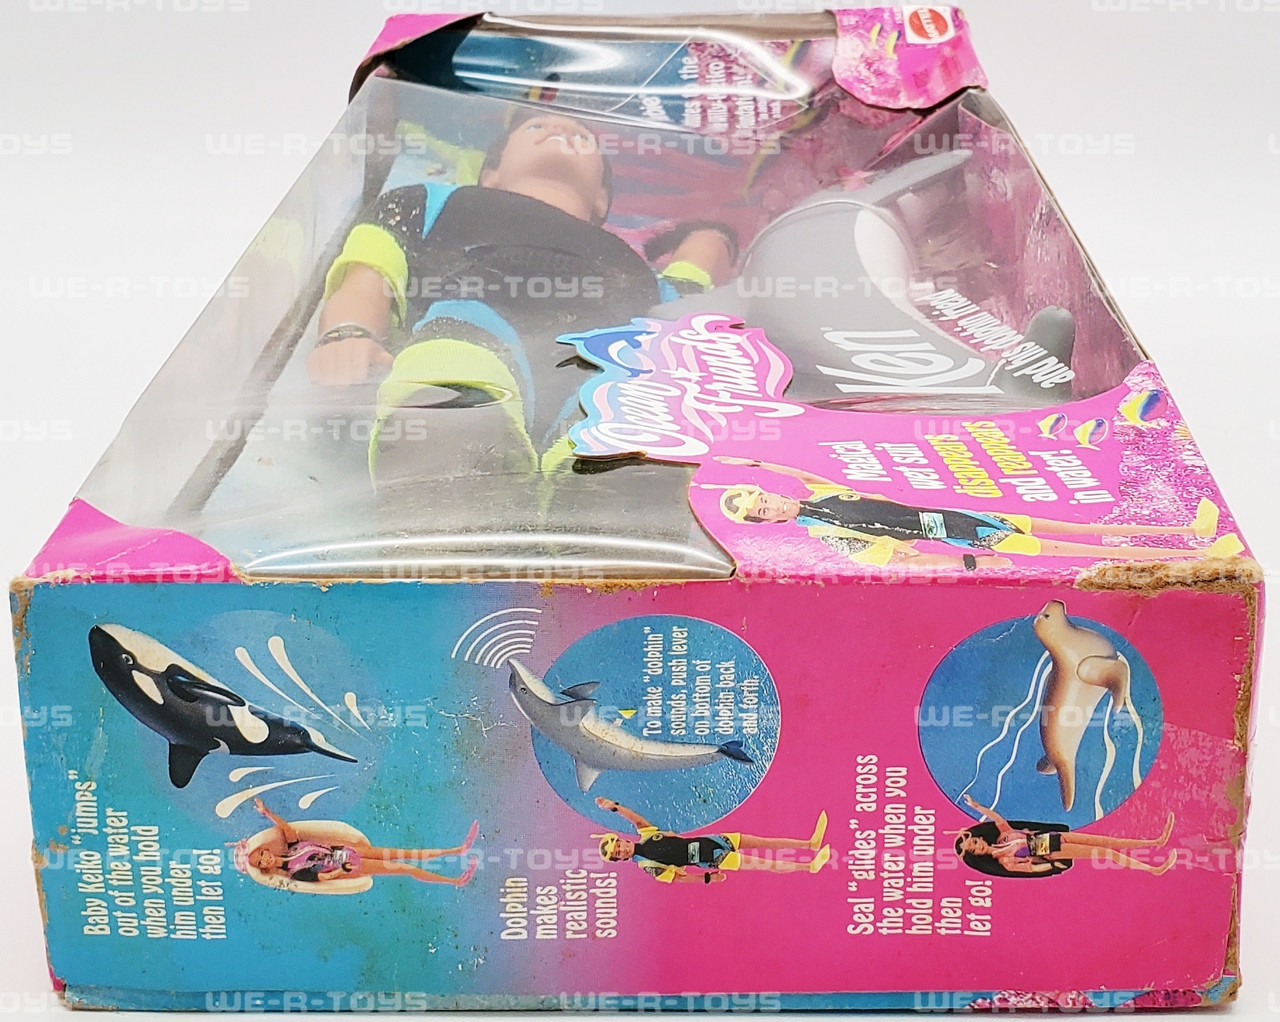 Barbie Ocean Friends Ken Doll & His Dolphin Friend 1996 Mattel #15430 NRFB  - We-R-Toys